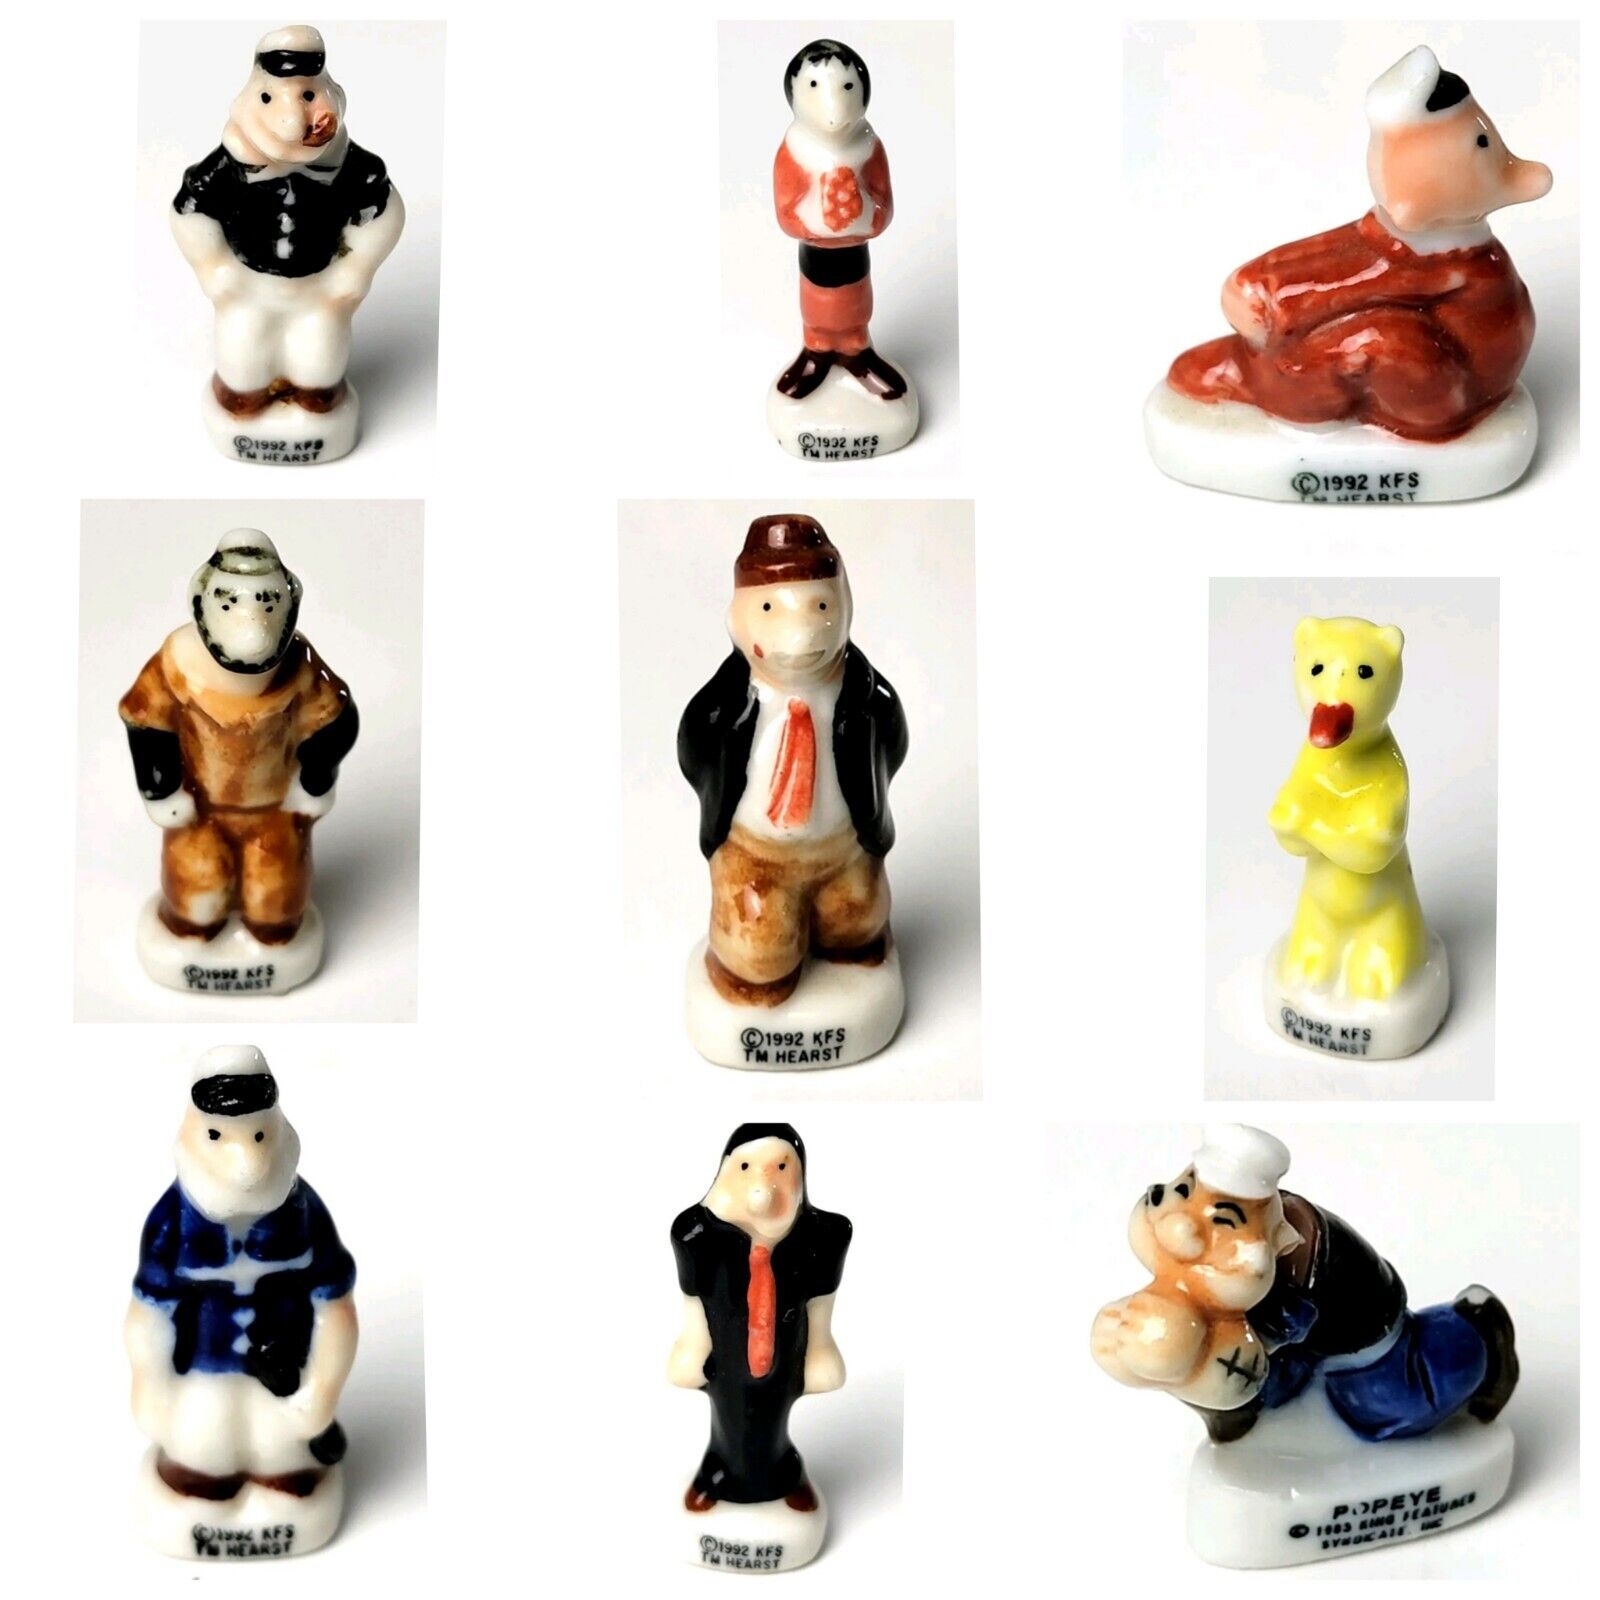 Set of  9 Popeye the Sailor Cartoon Character Mini Figures 1992 KFS TM Hearst